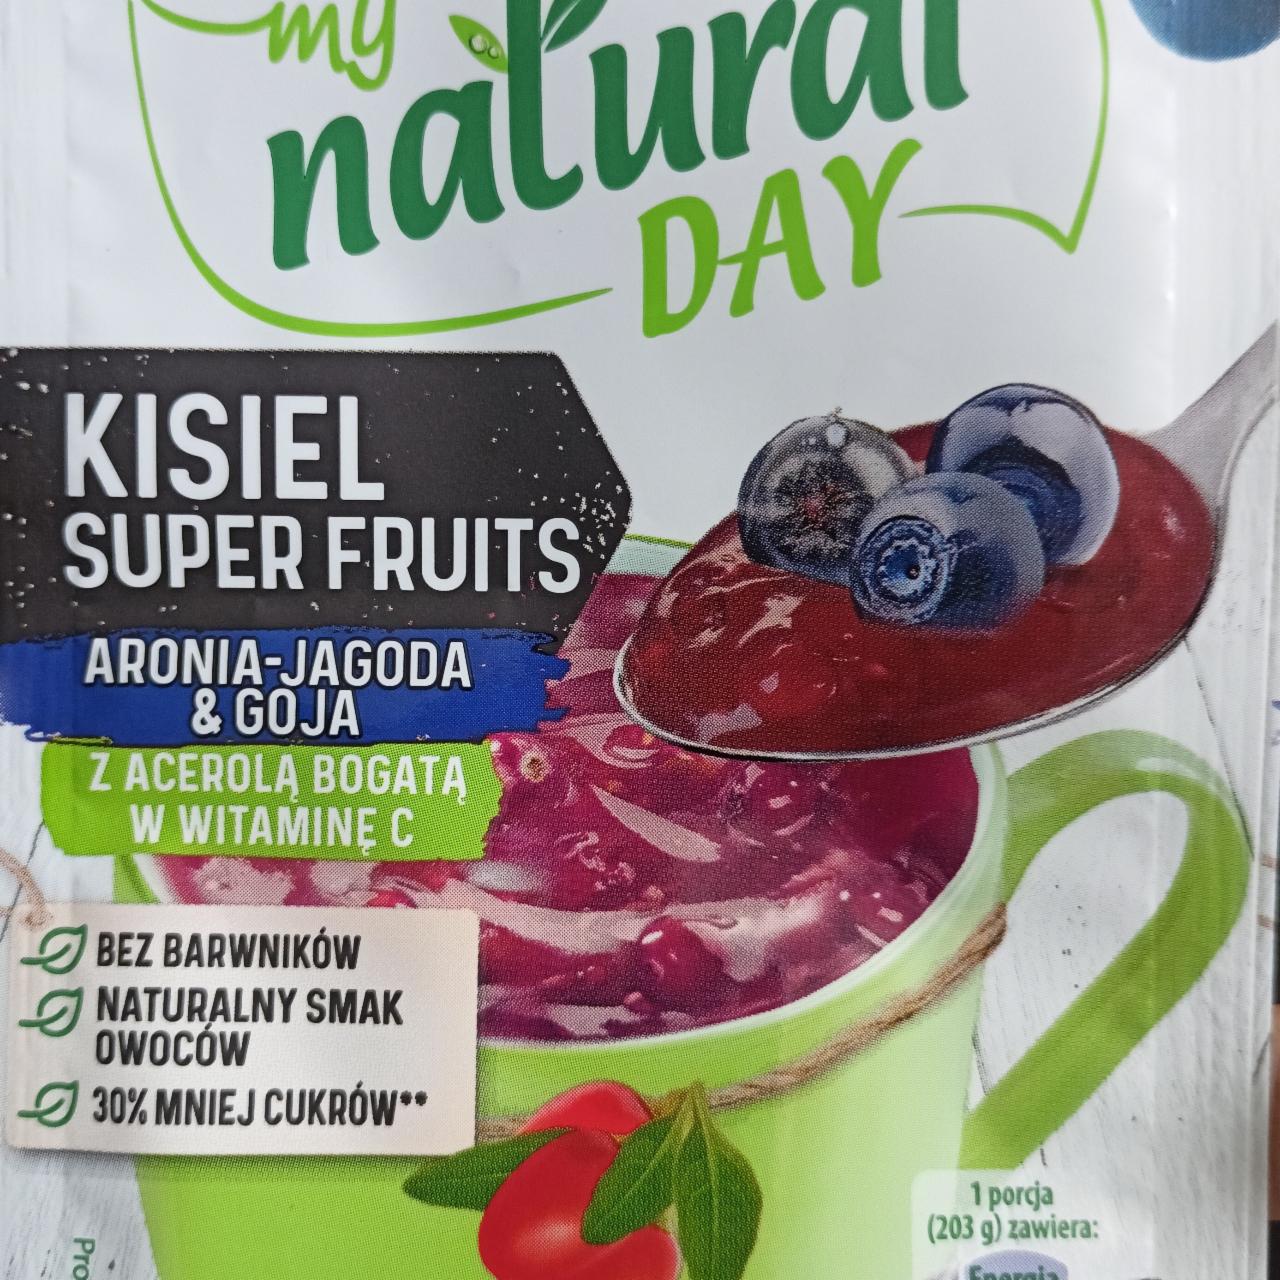 Fotografie - My natural Day Kisiel Super Fruits Jagoda-Aronia & Goya Dr. Oetker